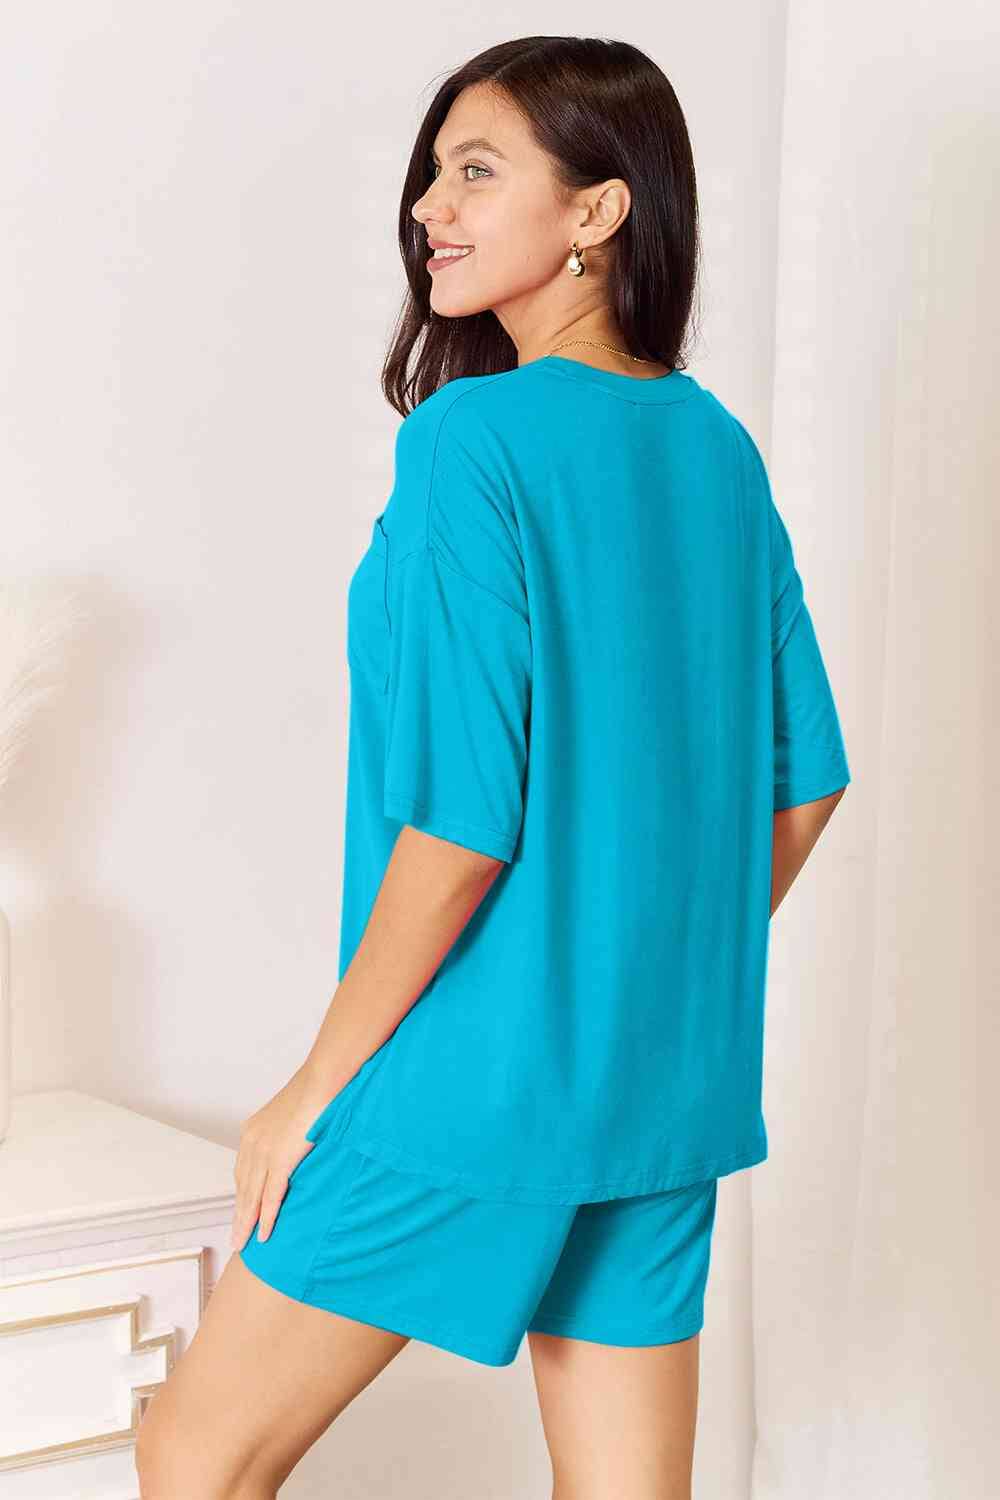 Basic Bae 2 piece Soft Rayon Stretchy Half Sleeve Top and Shorts Loungewear Set Sleepwear & Loungewear jehouze 